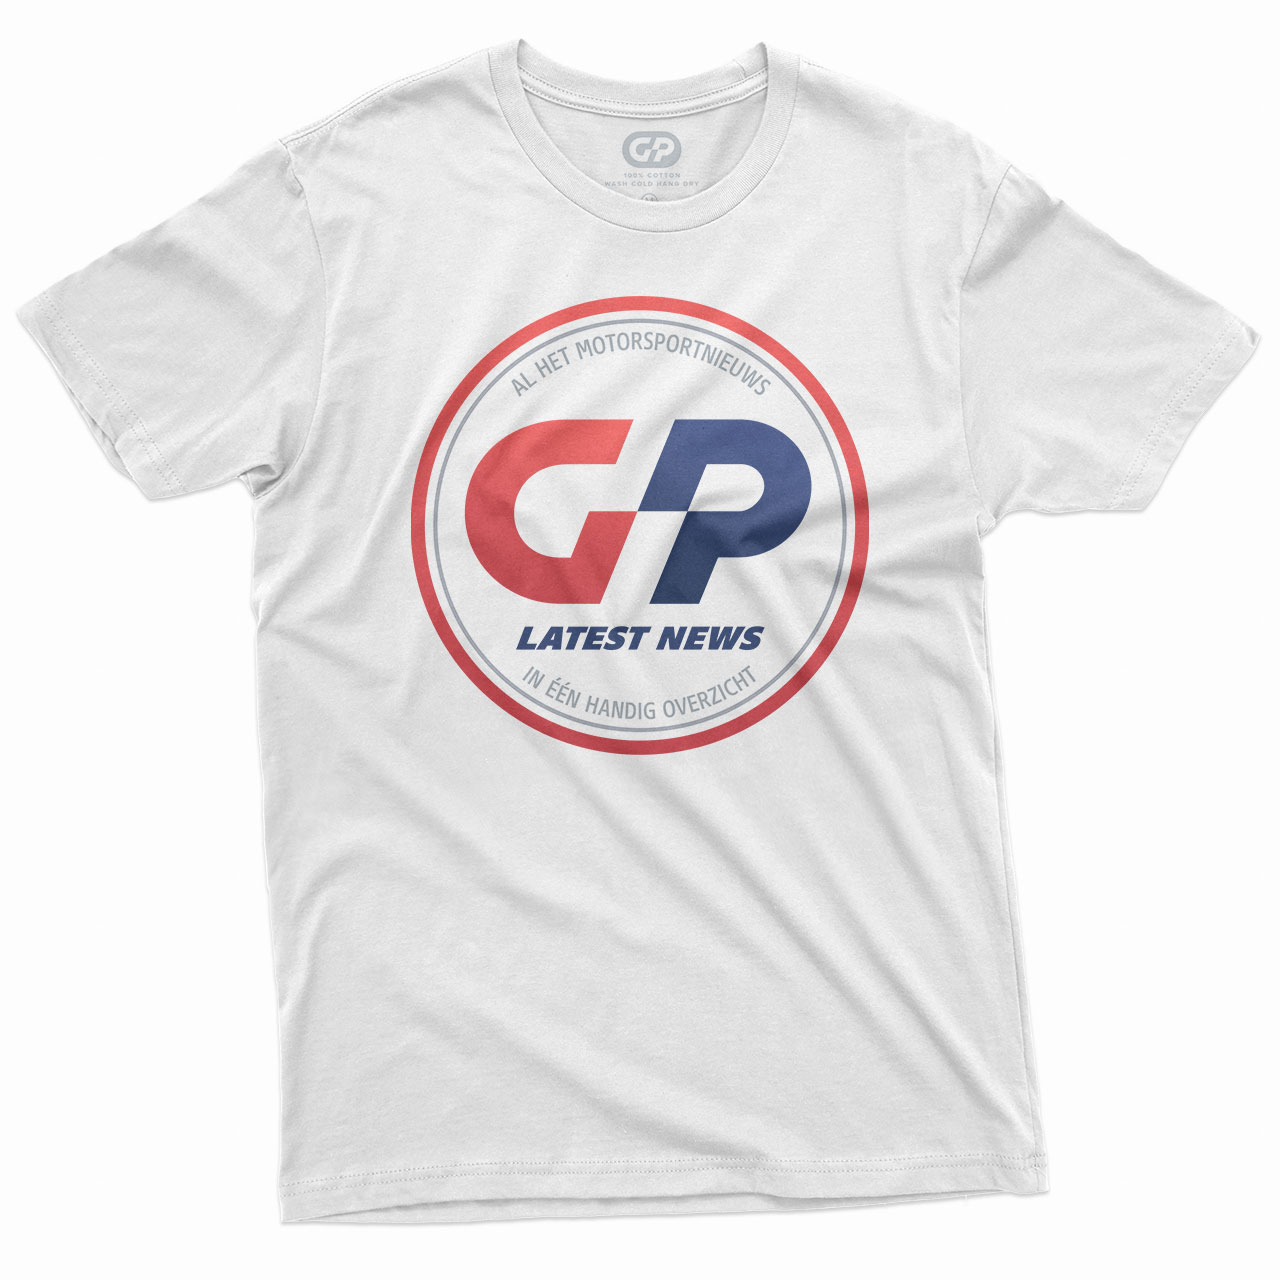 GP Latest News White T-Shirt